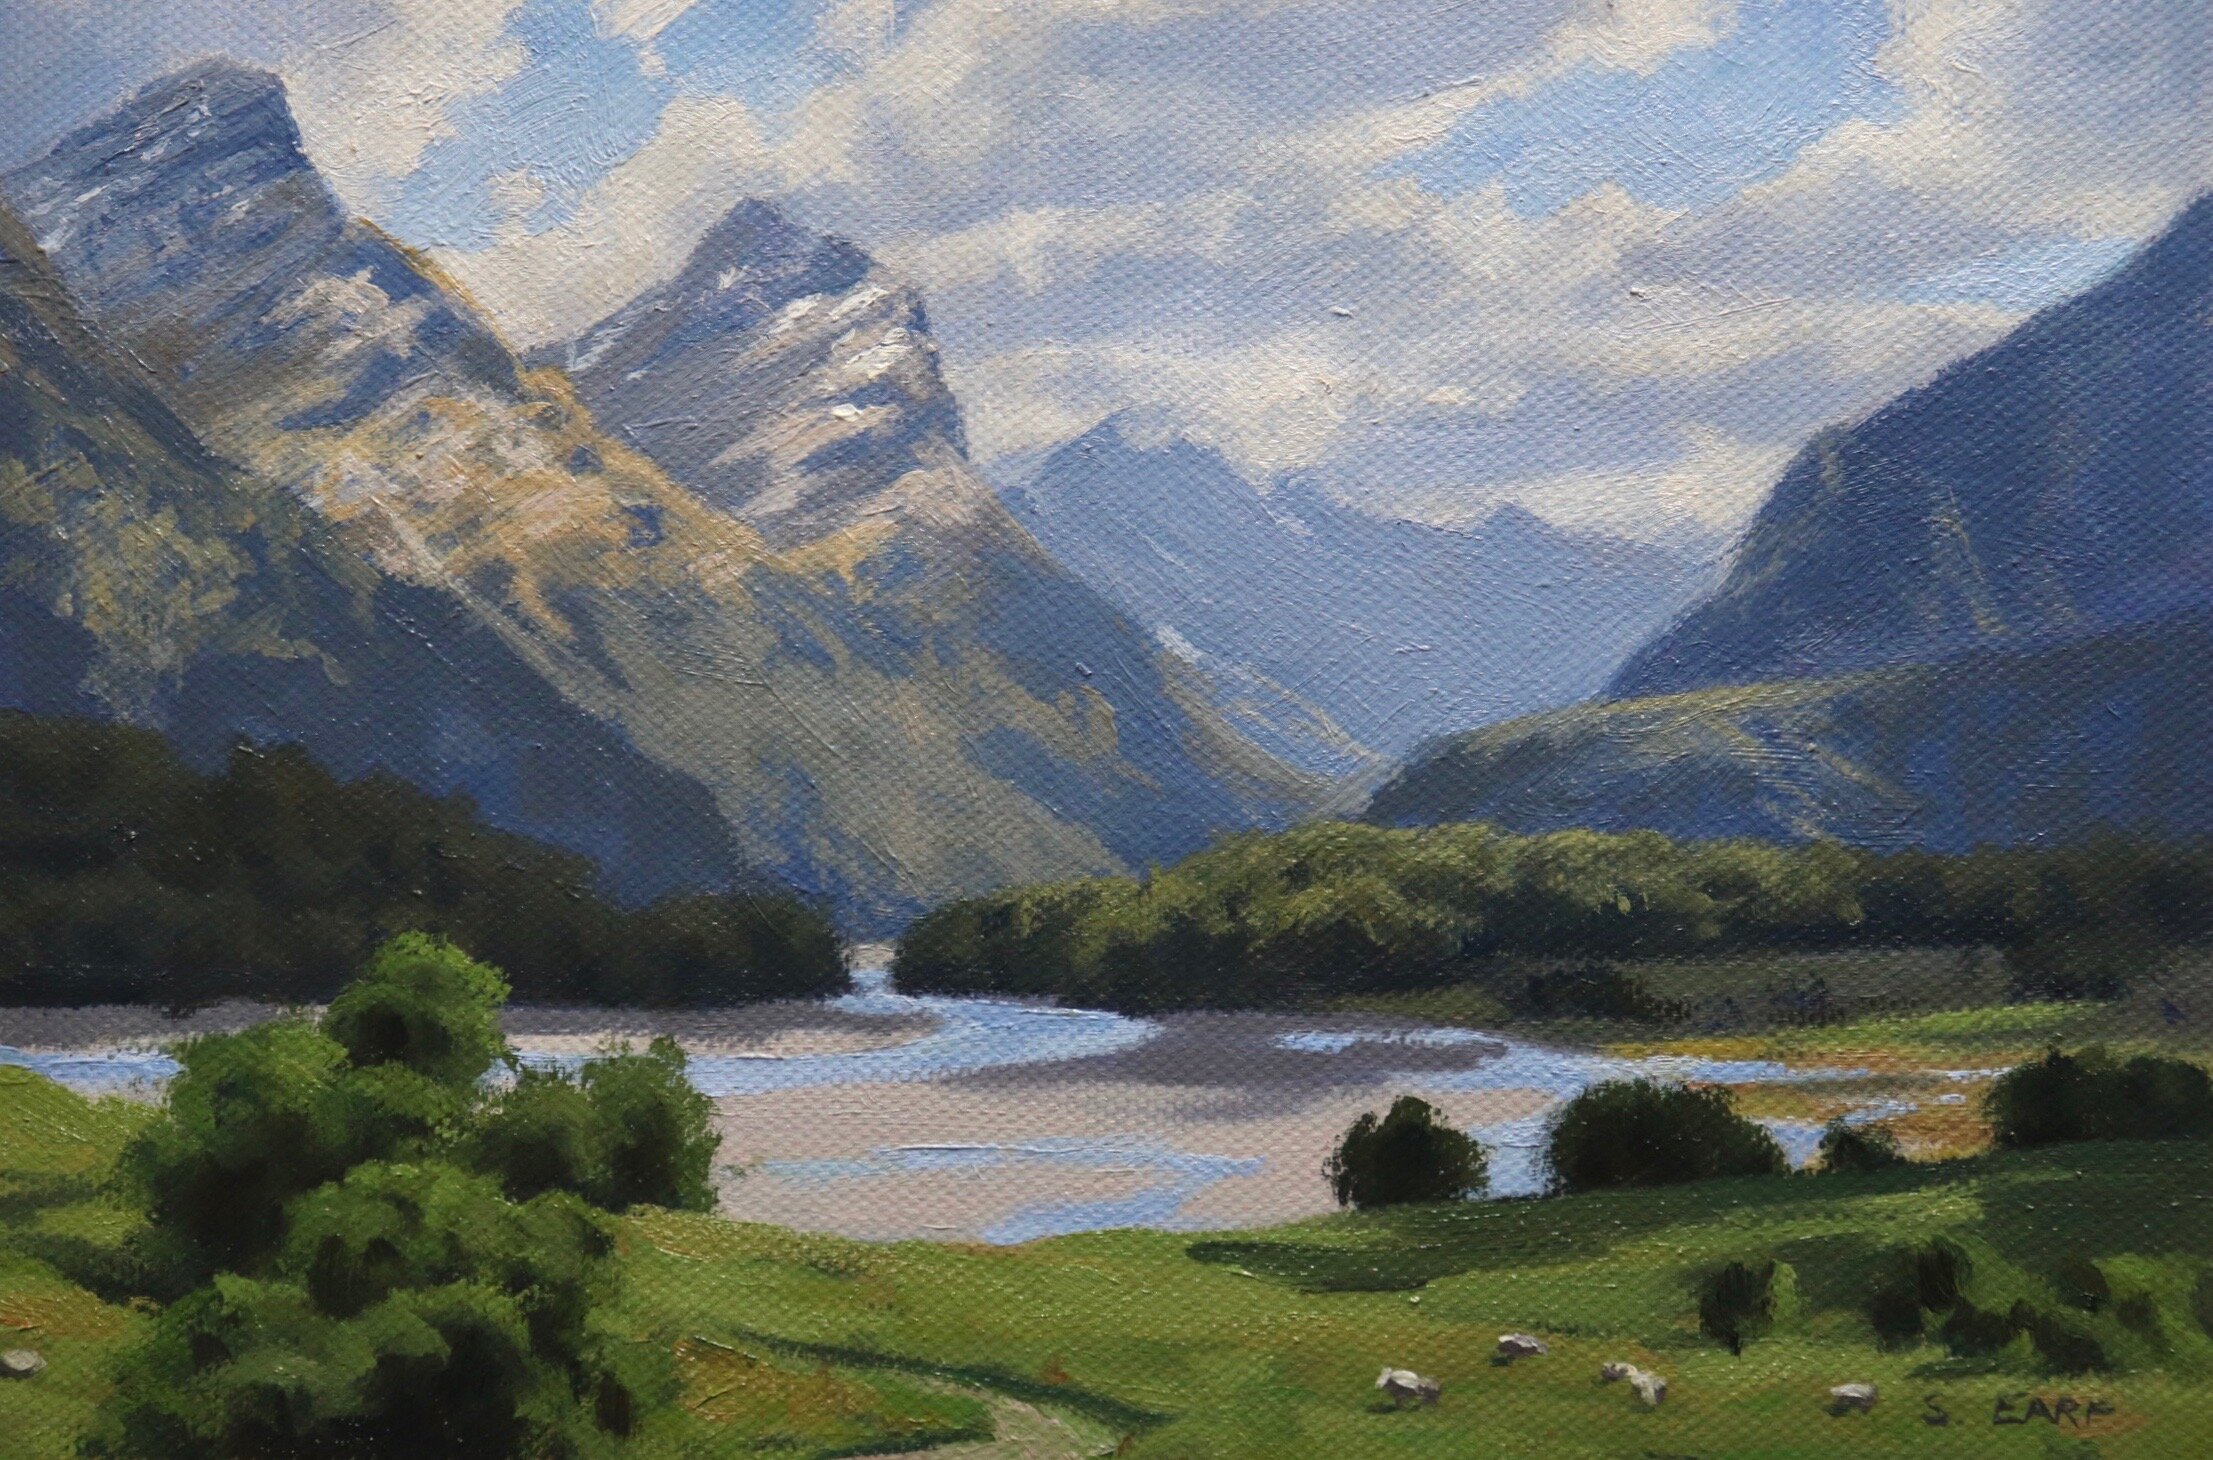 Paradise - Mt Chaos - New Zealand - Samuel Earp - Oil Painting.jpeg